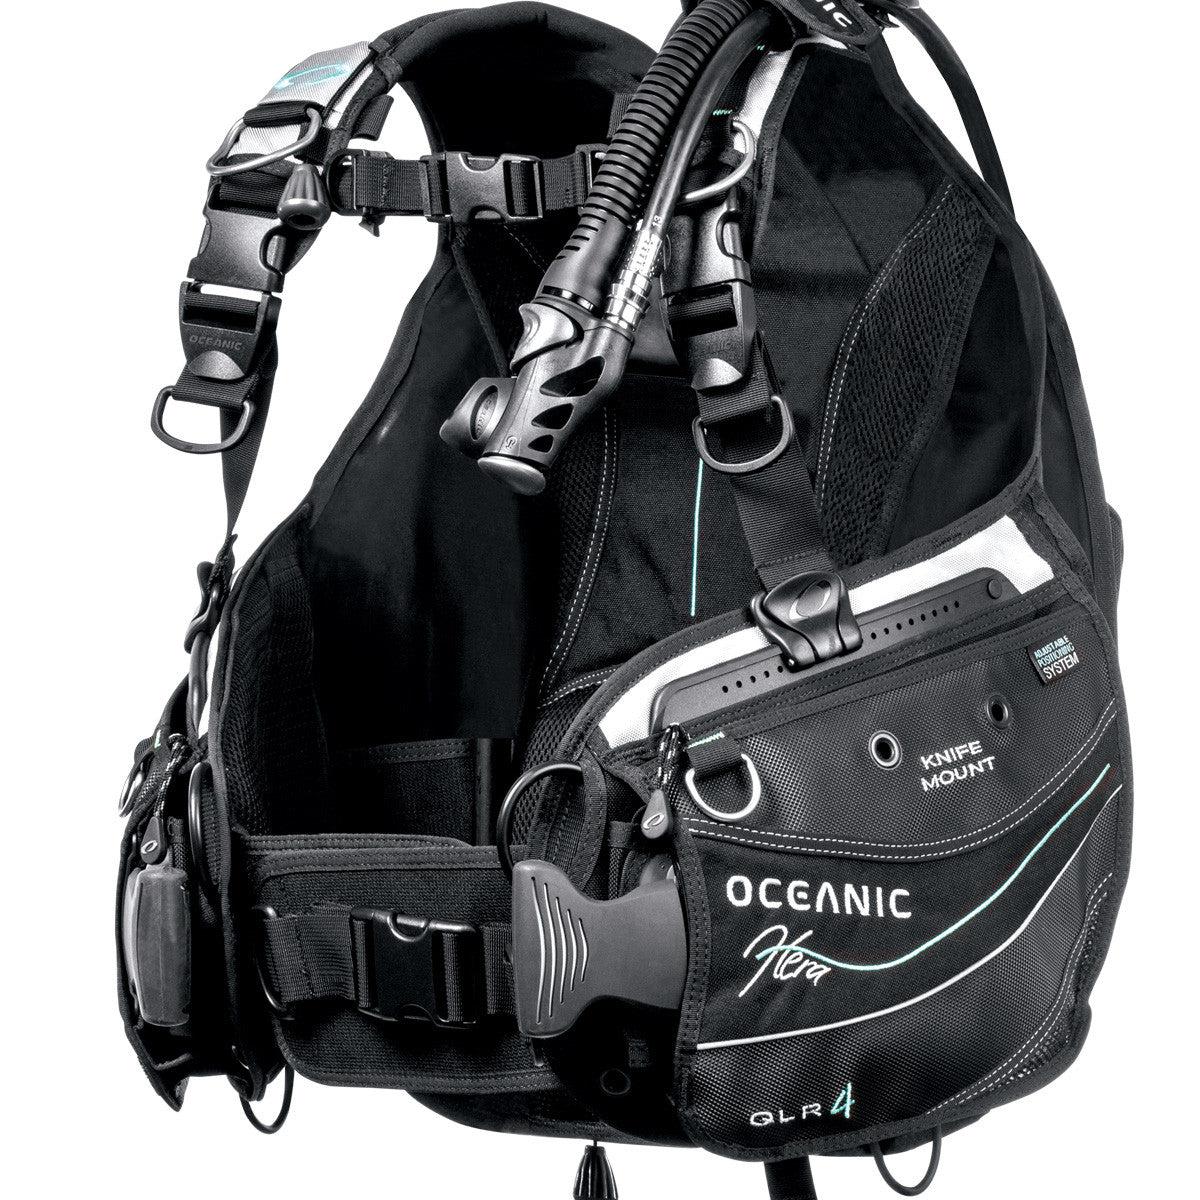 Oceanic Hera Ladies Jacket BCD w/ QLR4-SM